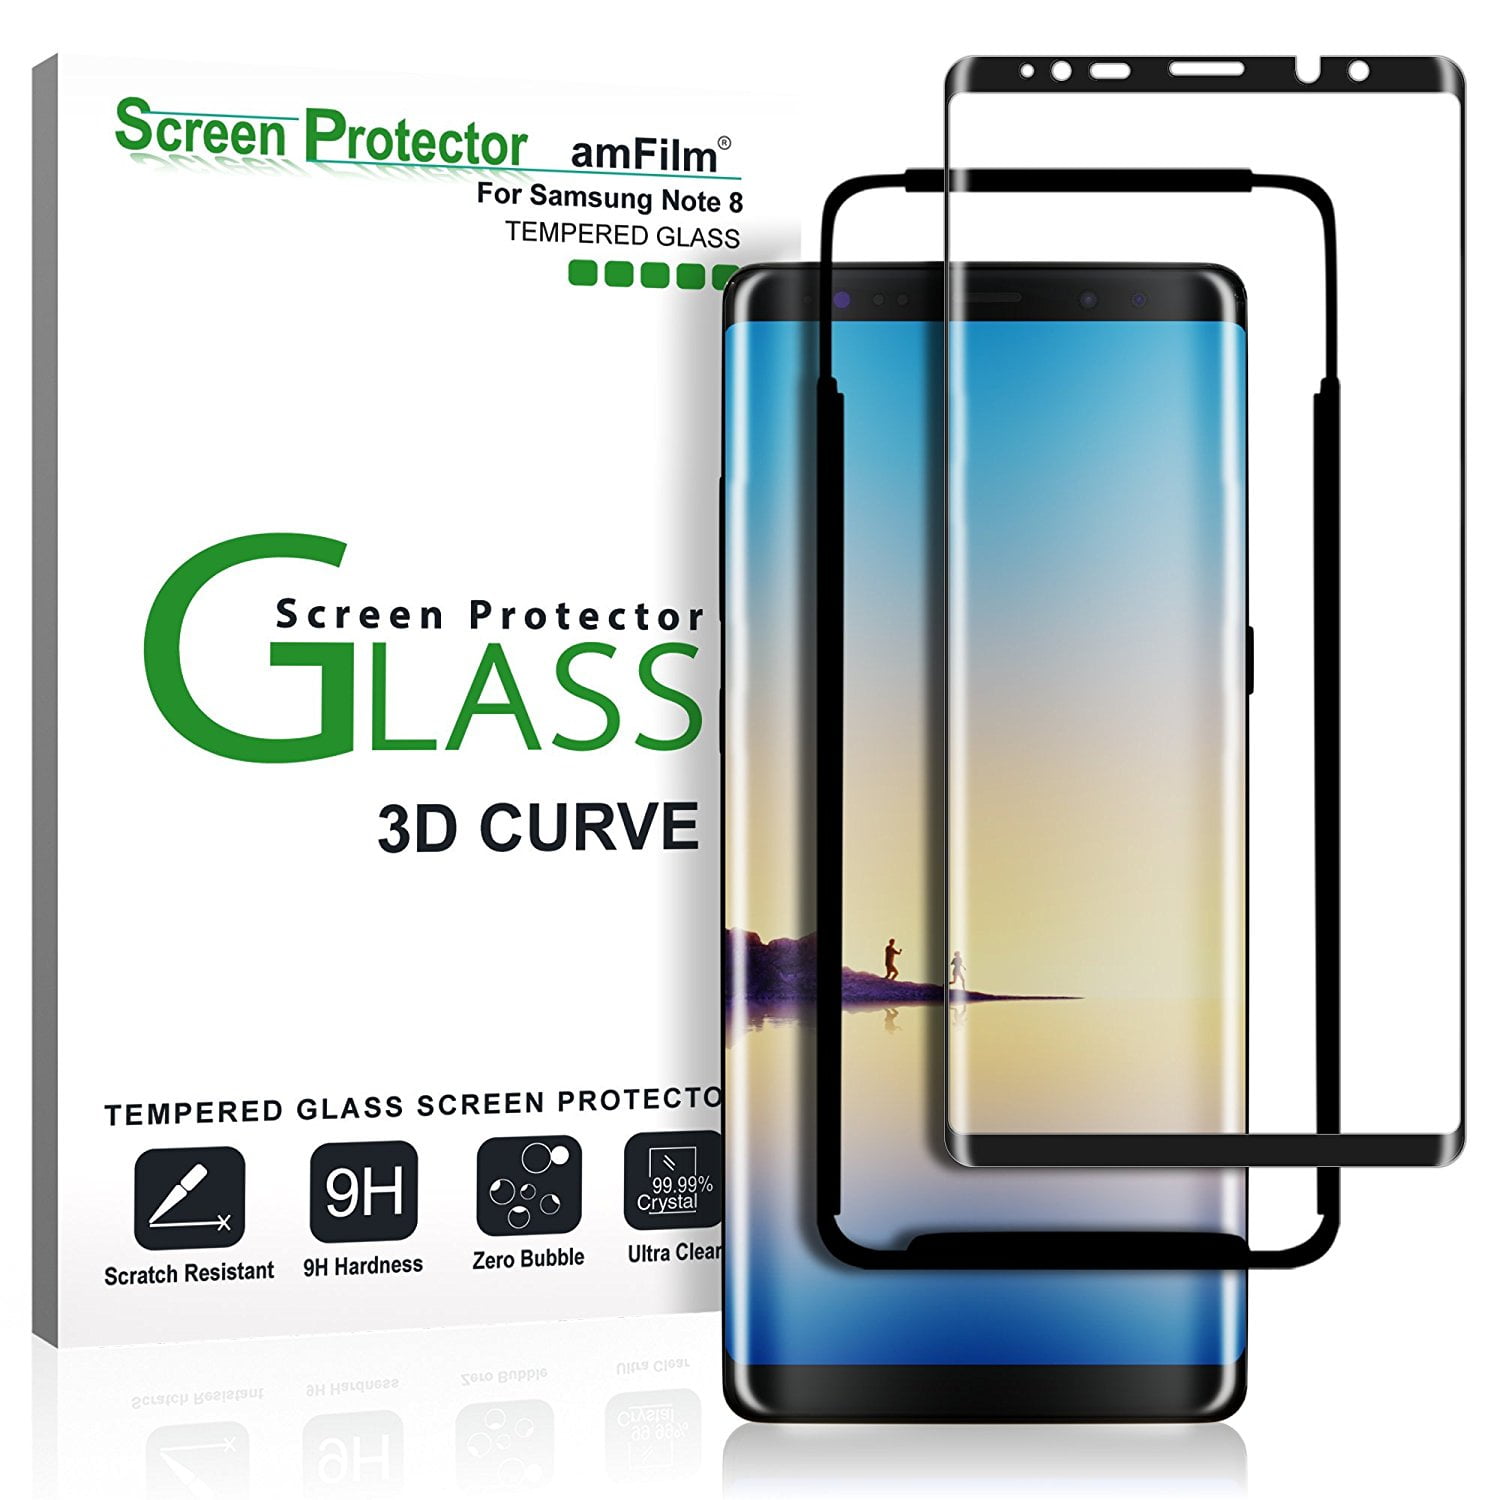 9h película protectora móvil cover original para Samsung Galaxy Note 4 